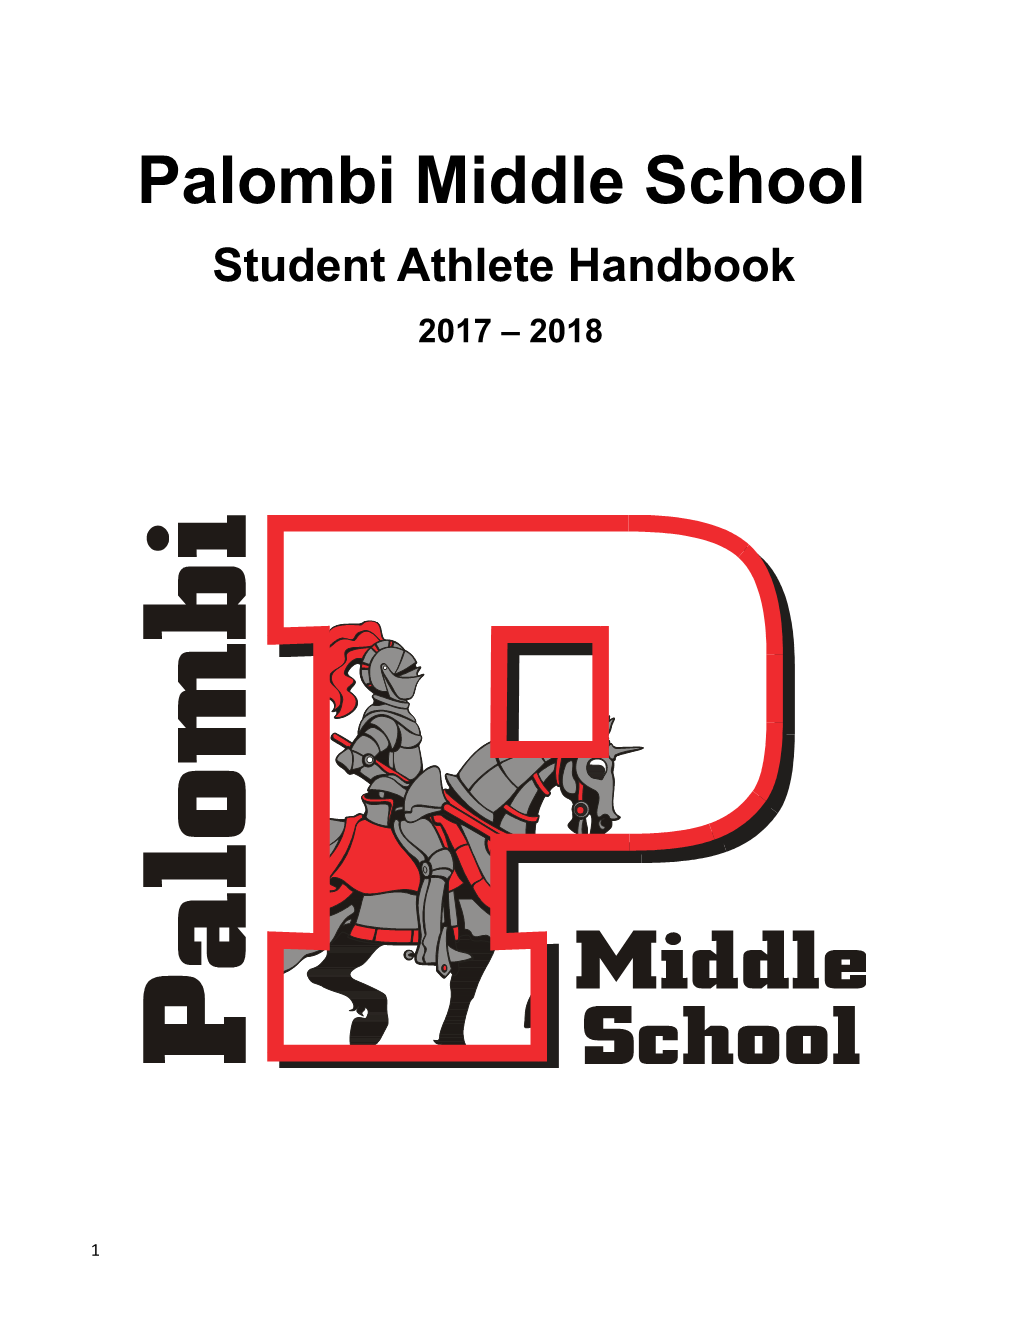 Palombi Middle School Student Athlete Handbook